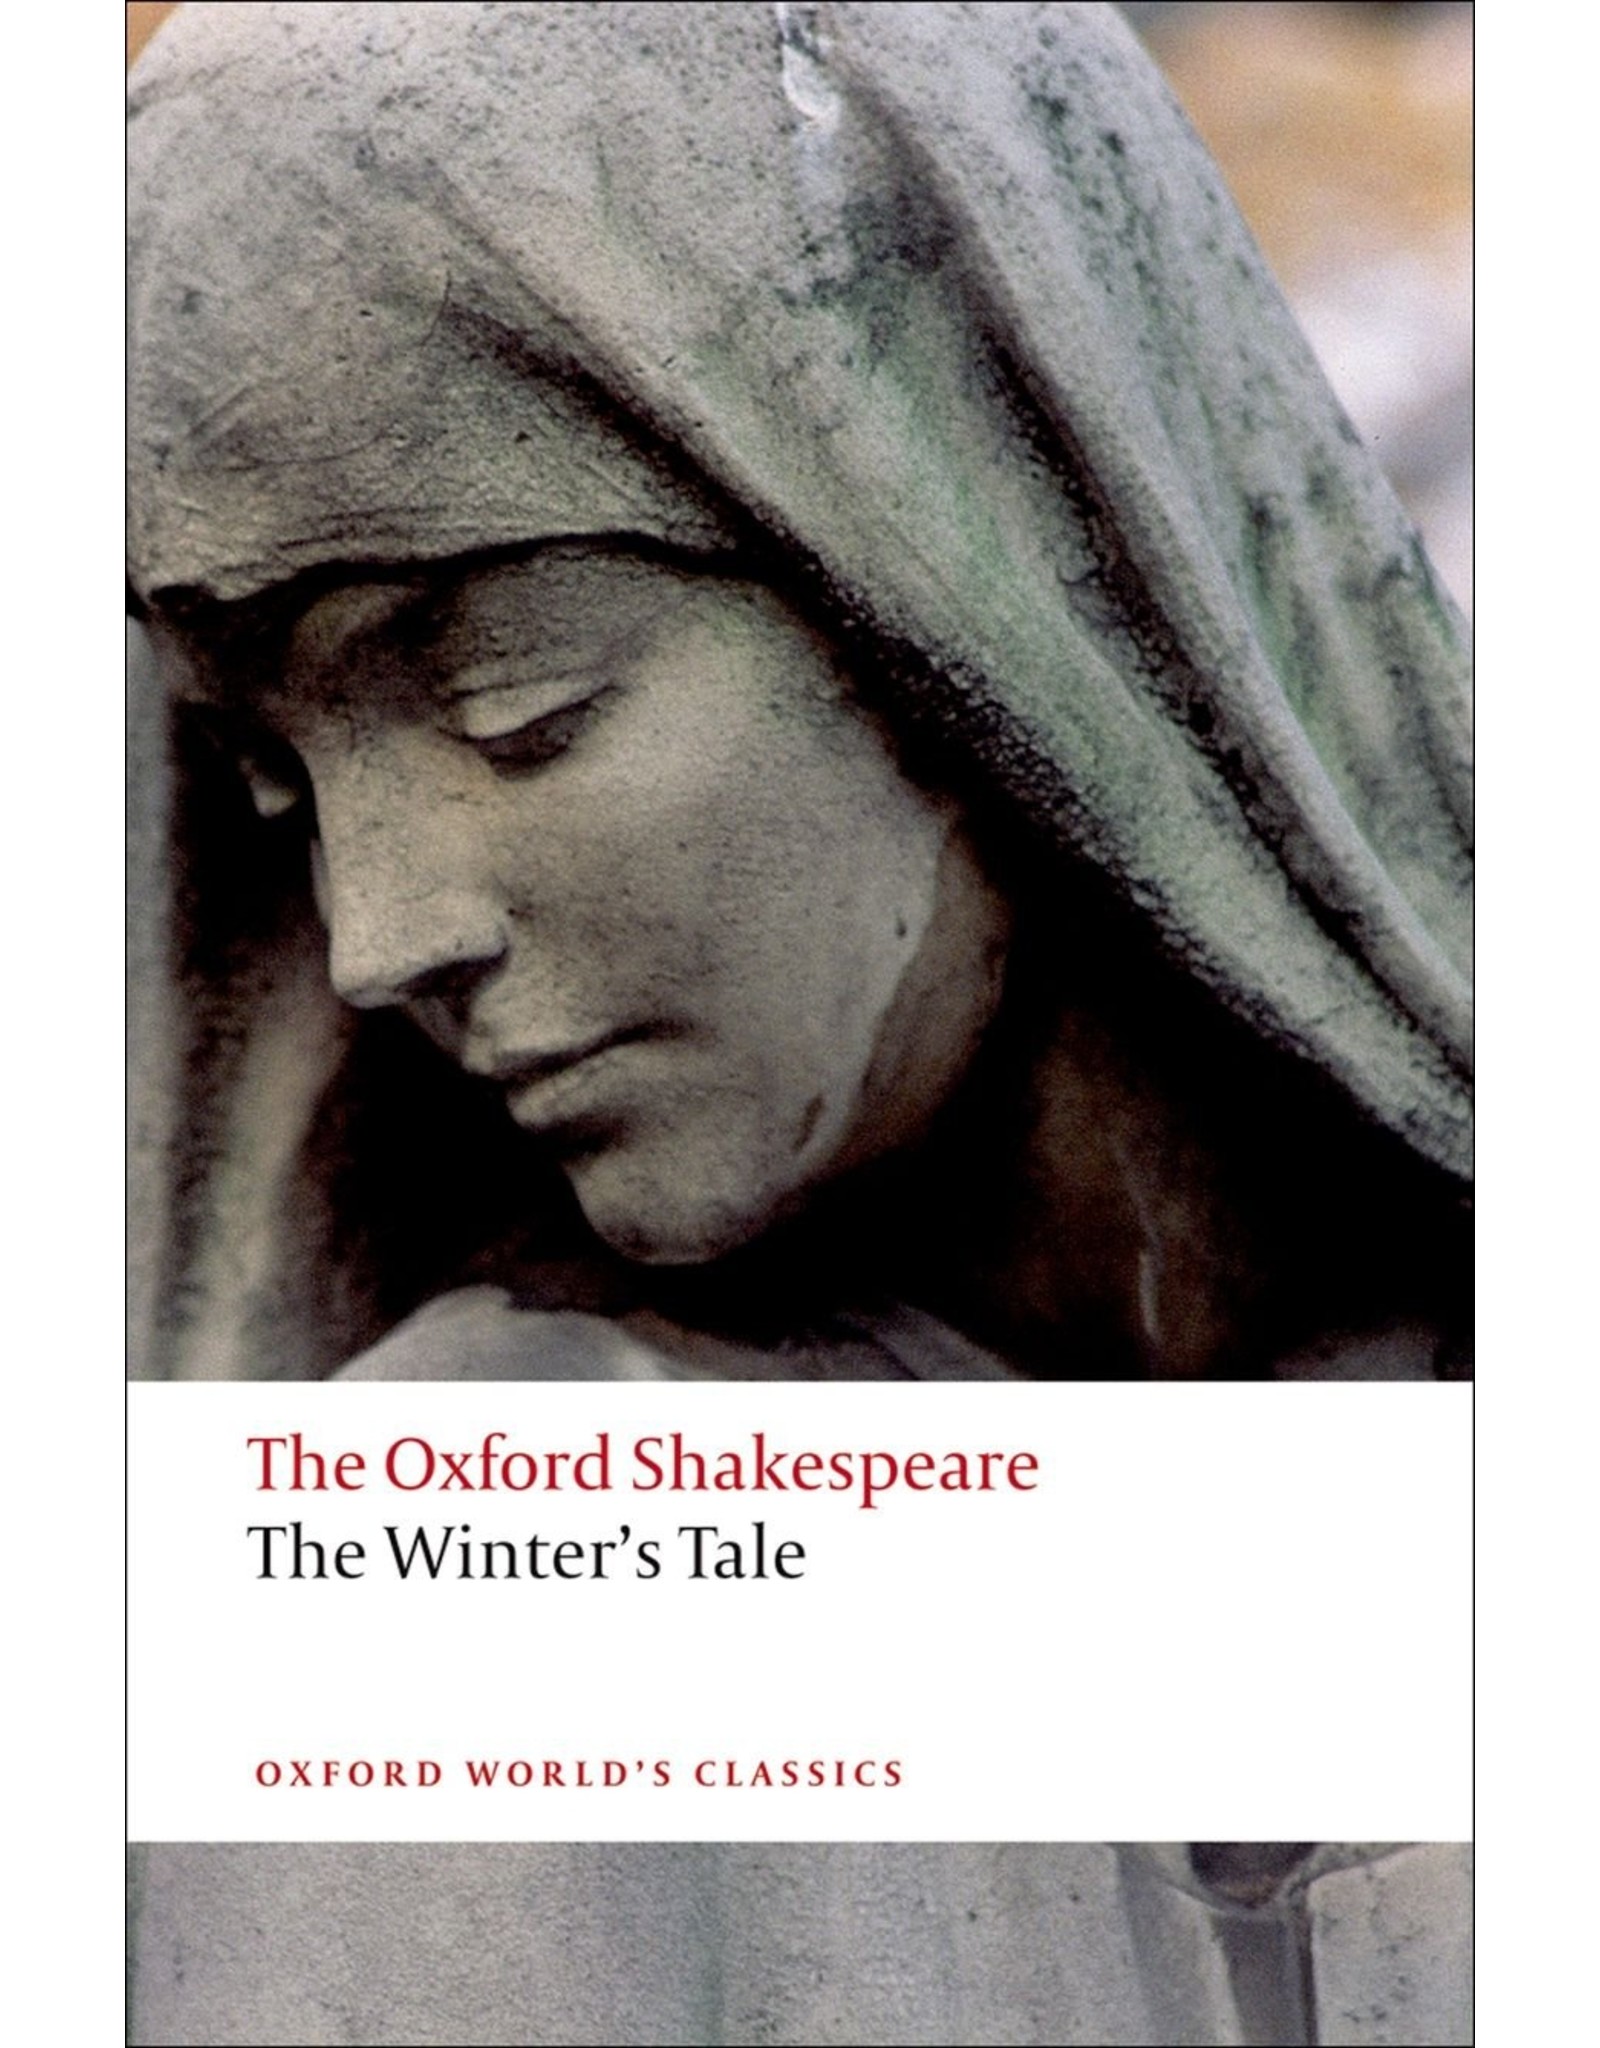 Literature The Oxford Shakespeare: The Winter’s Tale